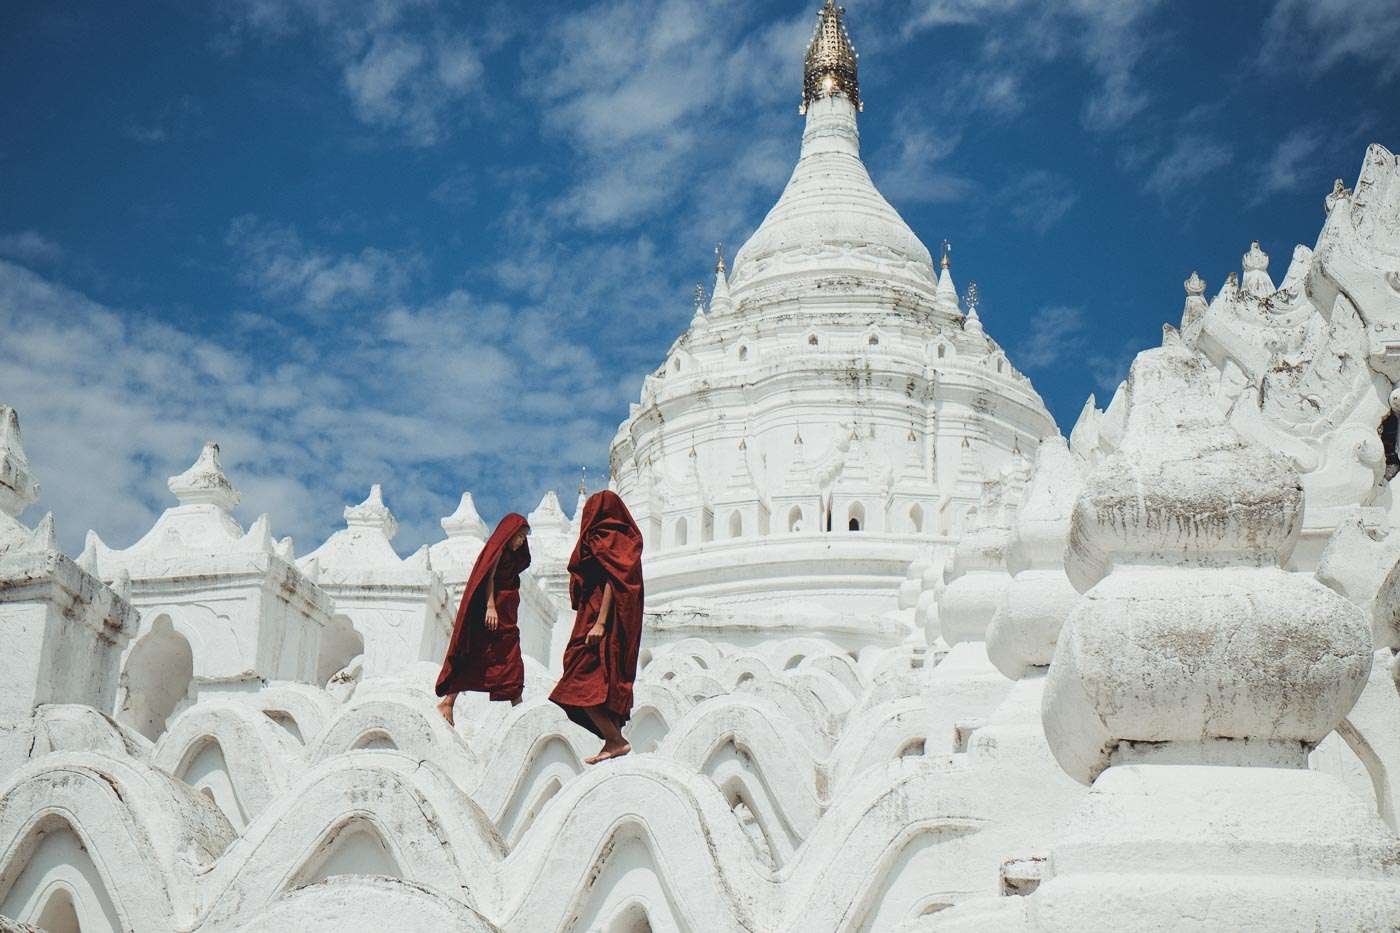 Burma photography tour: monastery section